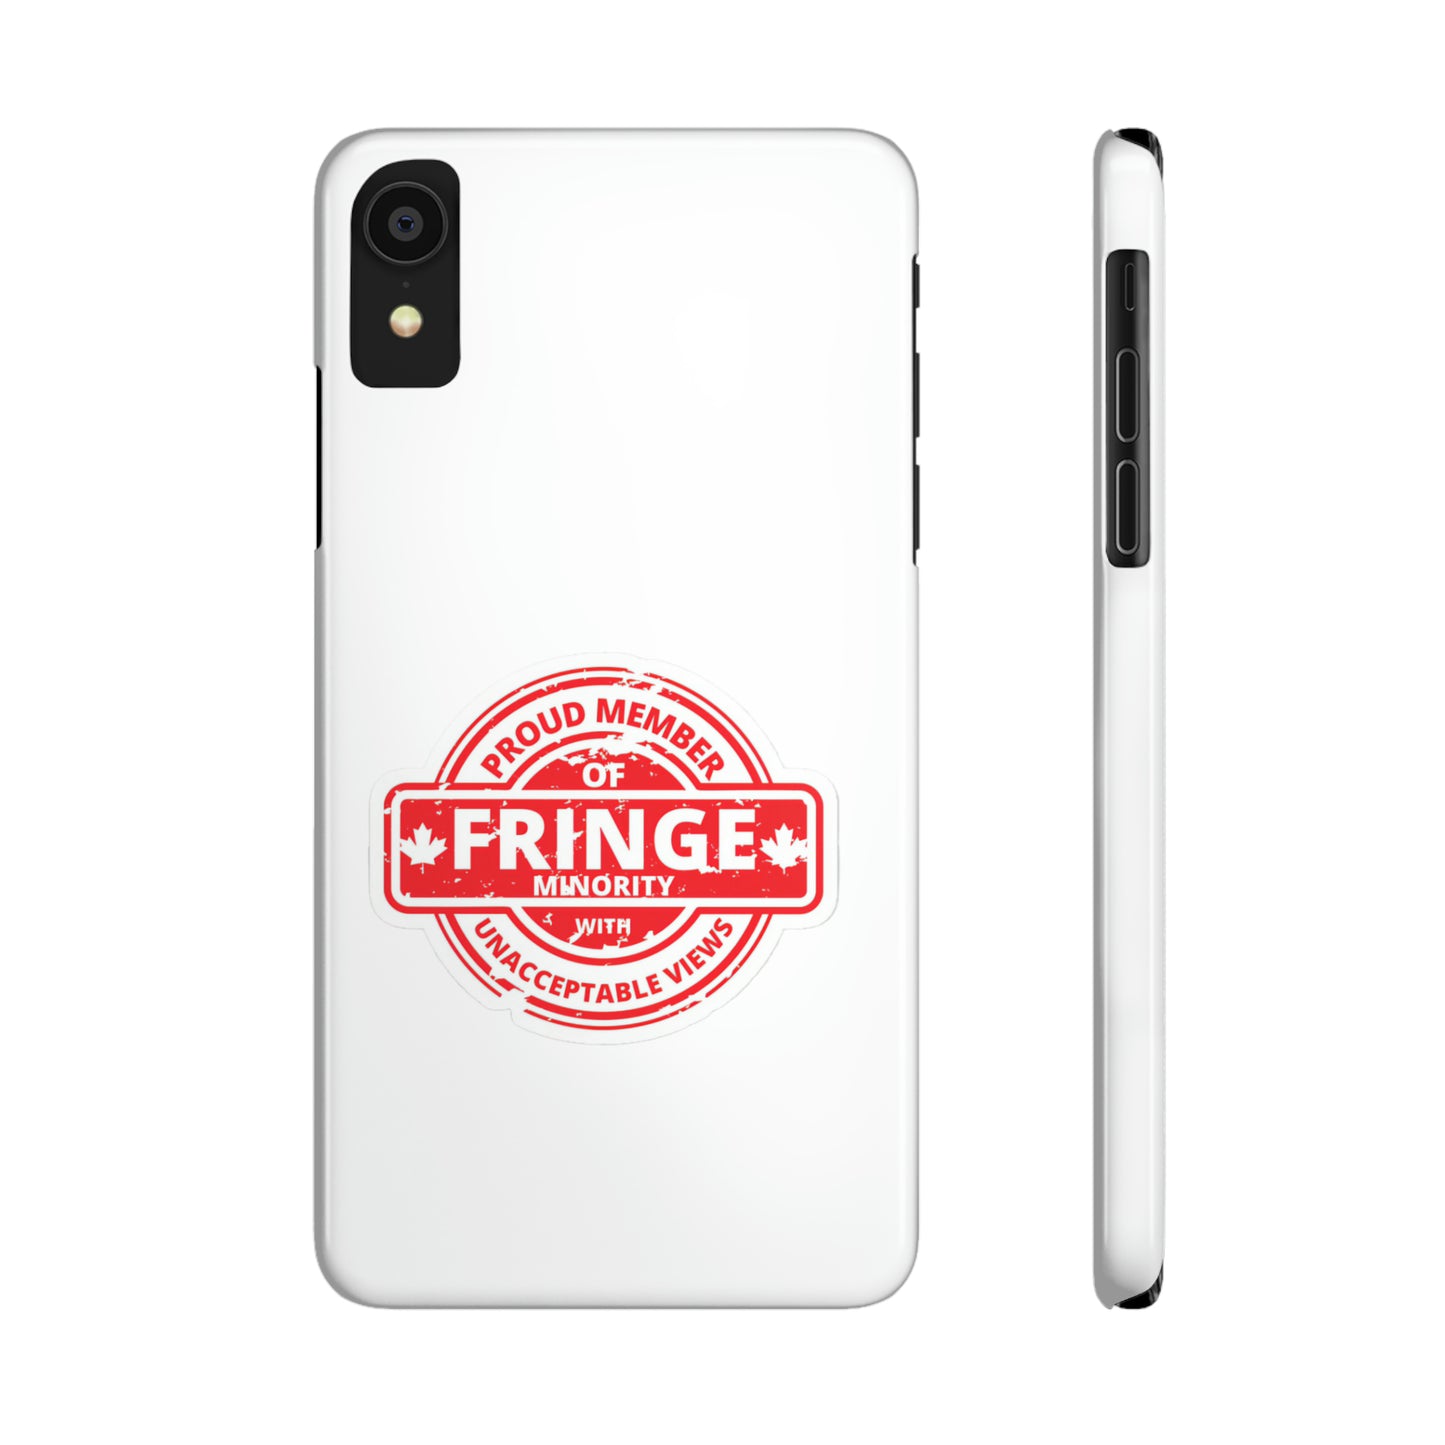 Fringe Minority iPhone Slim Phone Cases